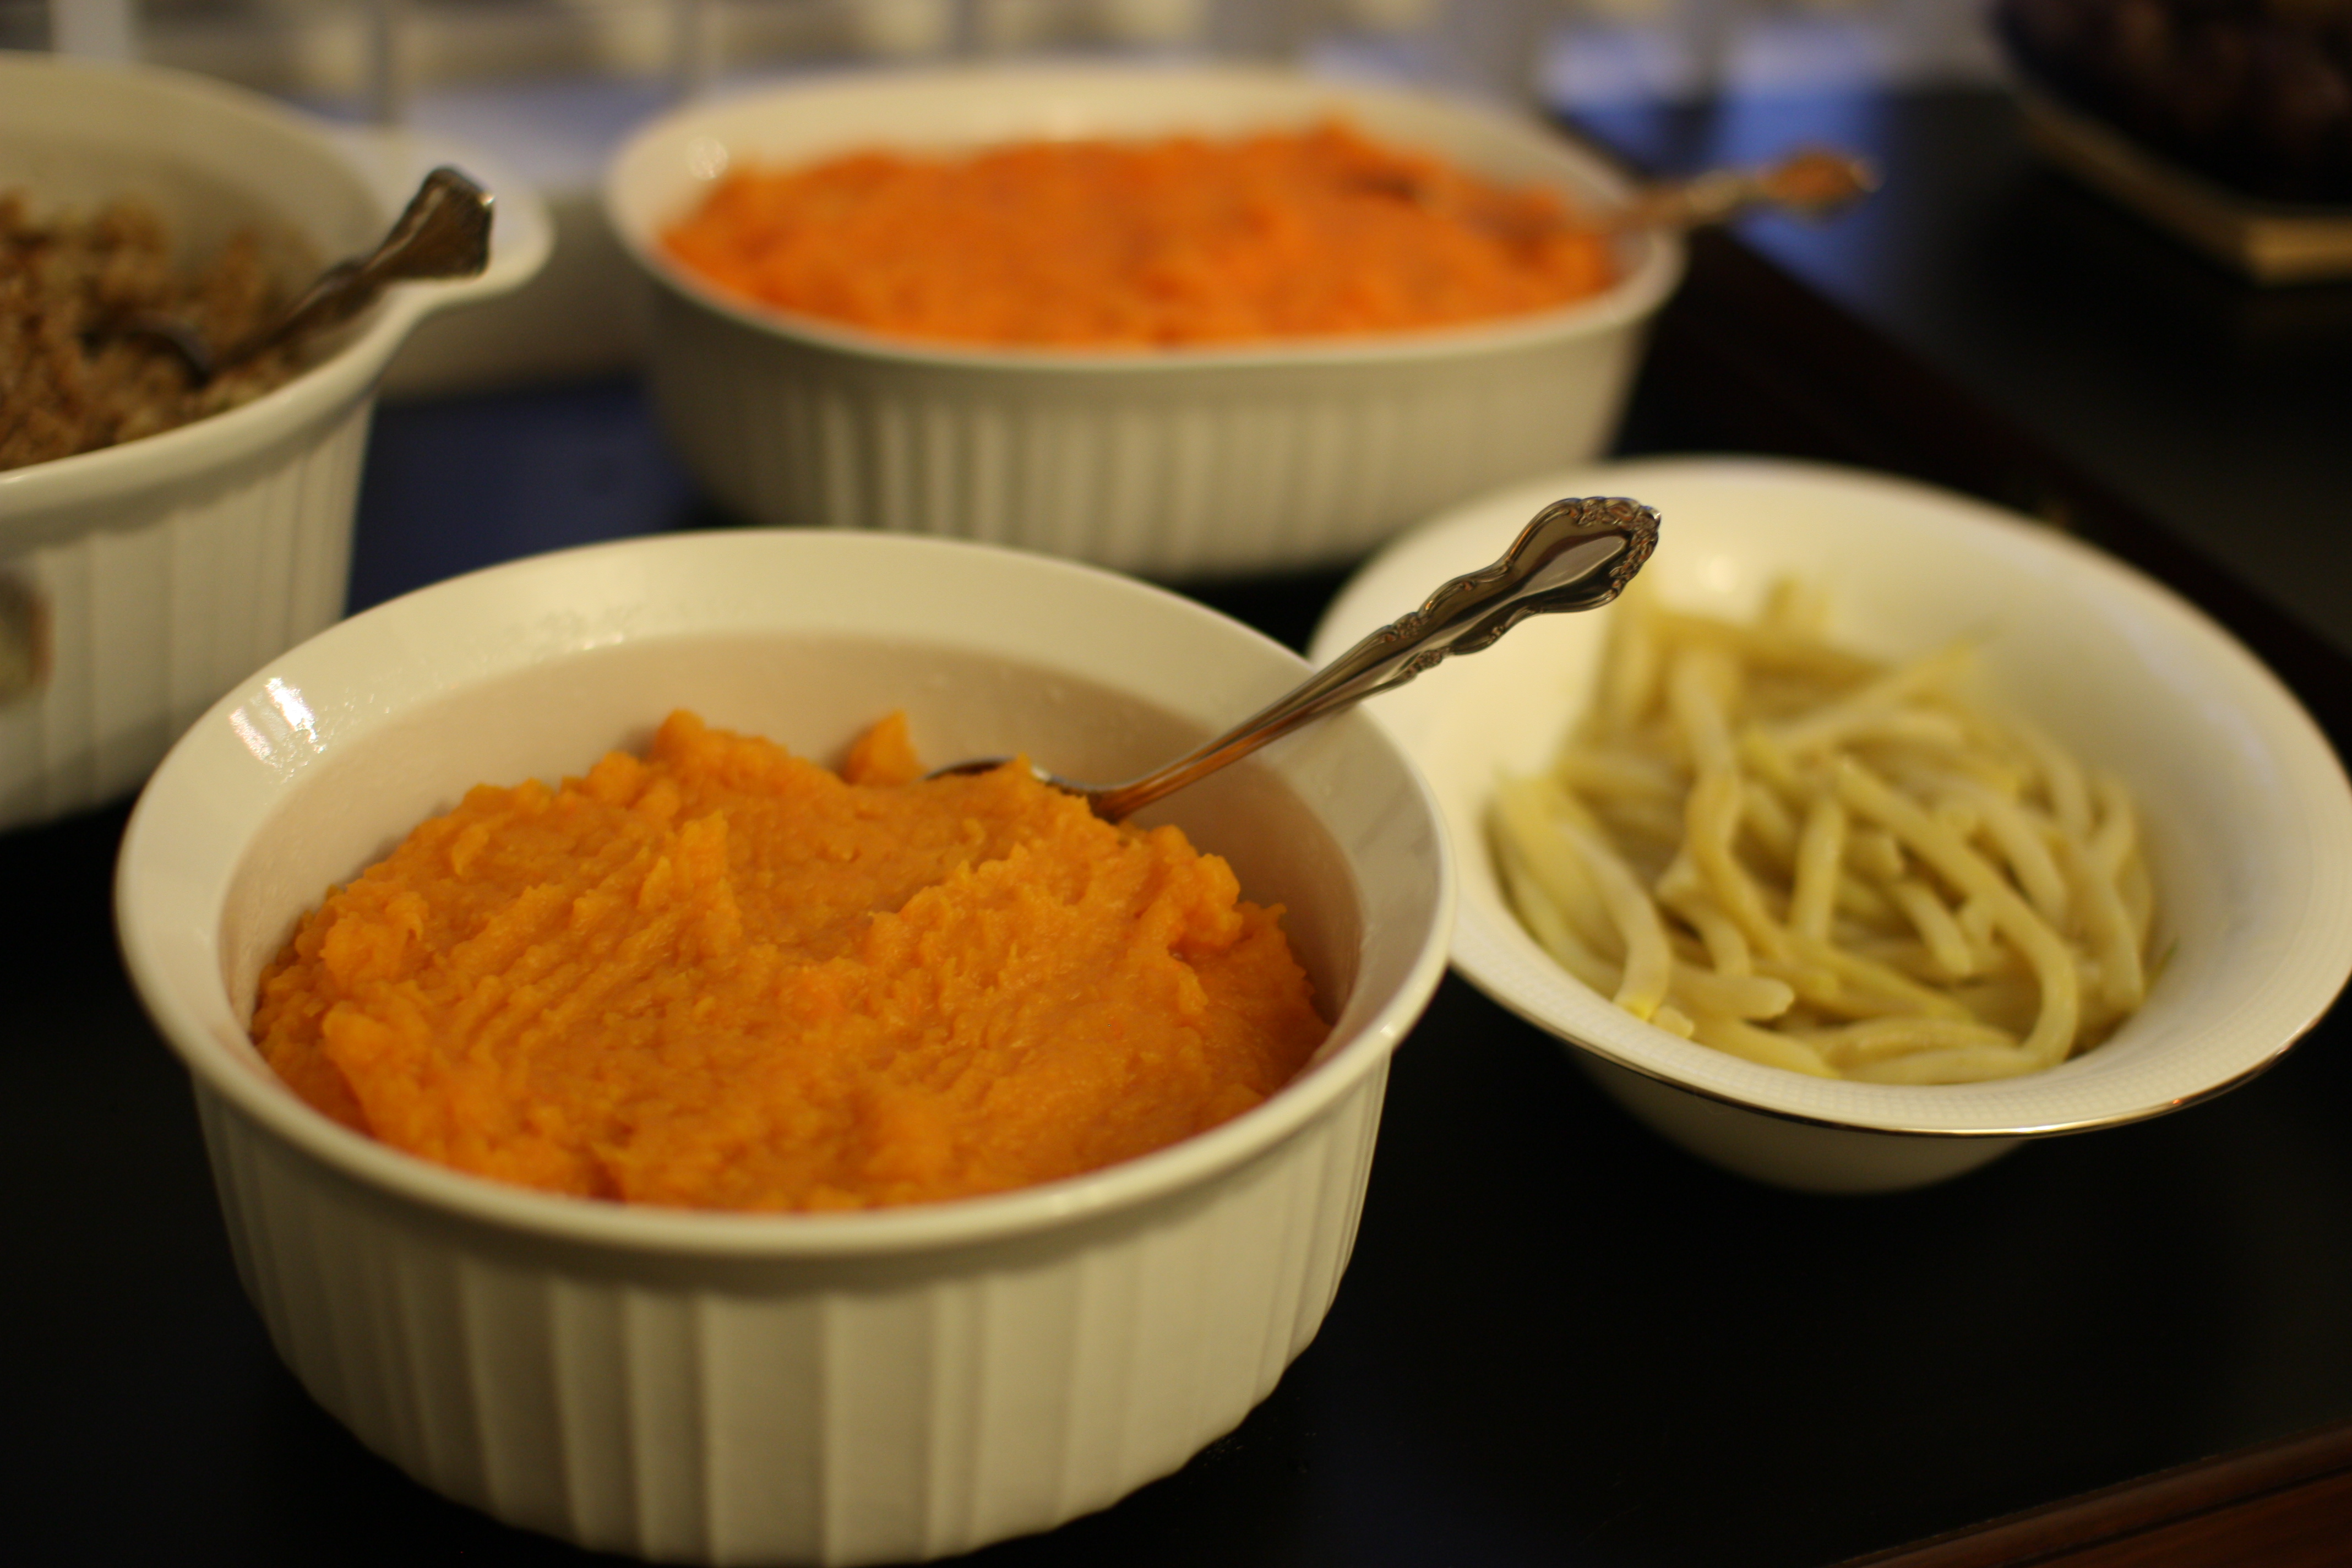 Thanksgiving Dinner: butternut squash, sweet potatoes, wax beans, and stuffing